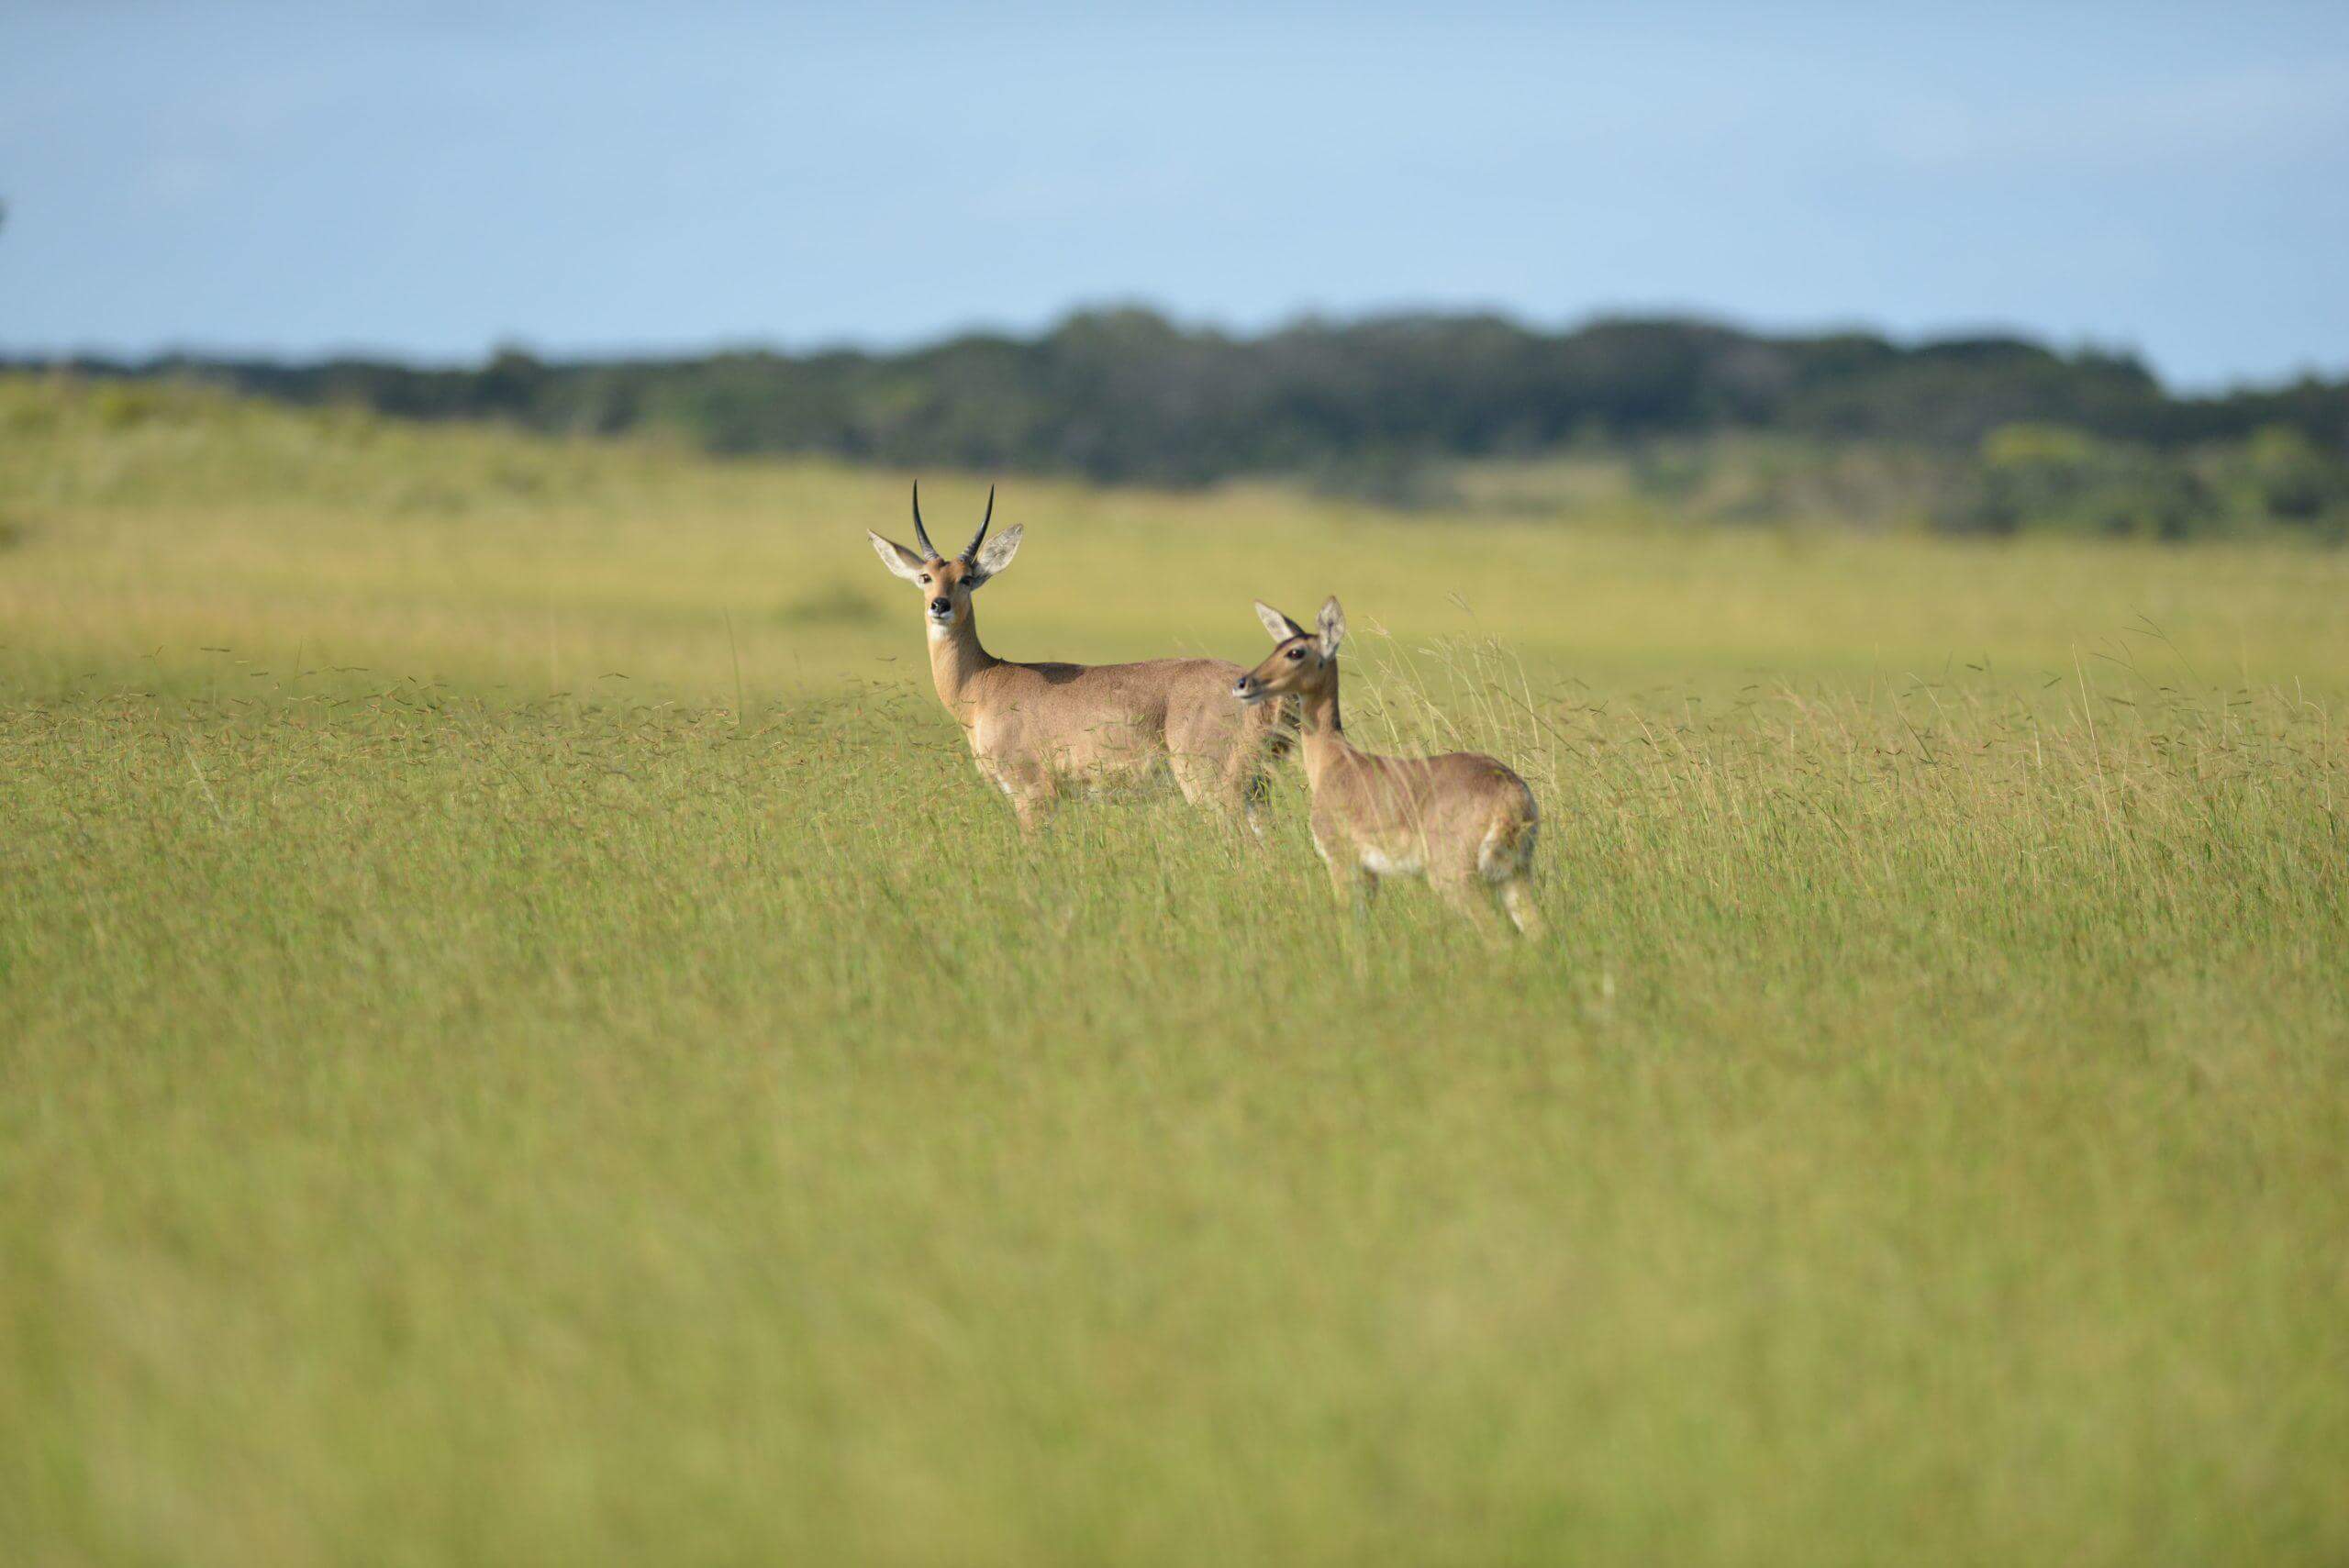 Two reedbucks standing in a grass field